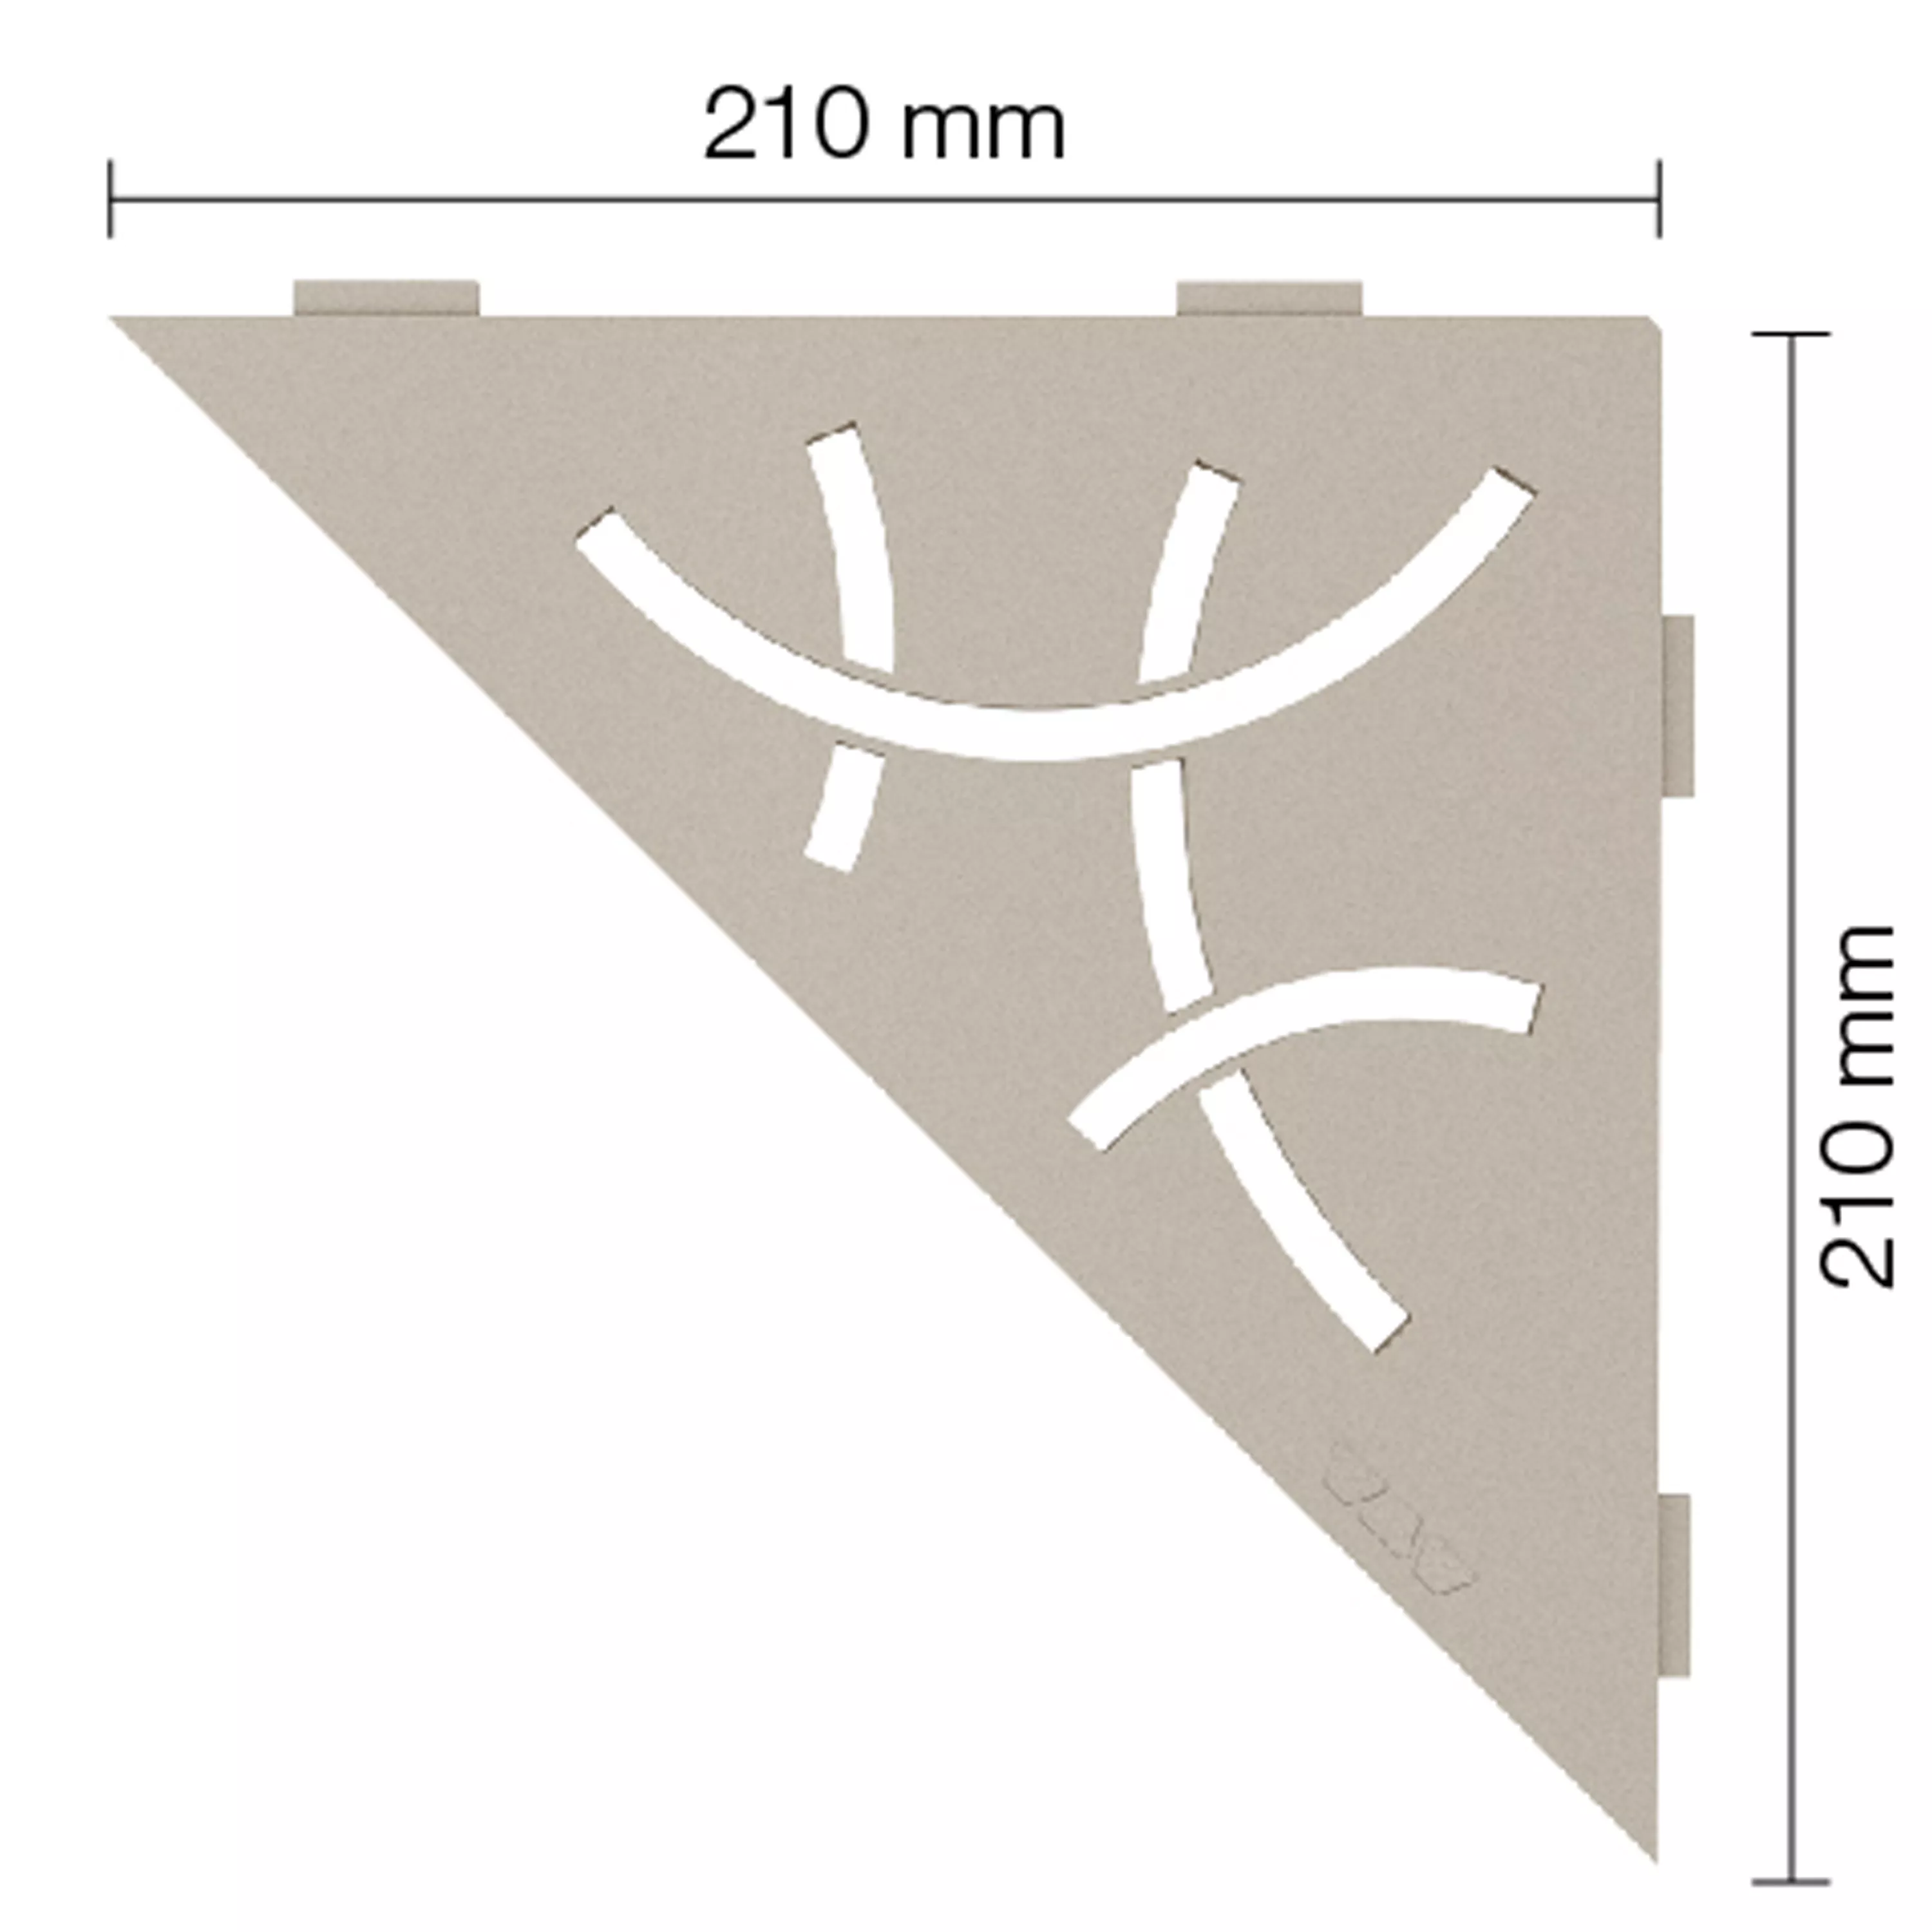 Schlüter estantería de pared triangular 21x21cm Curve Crema